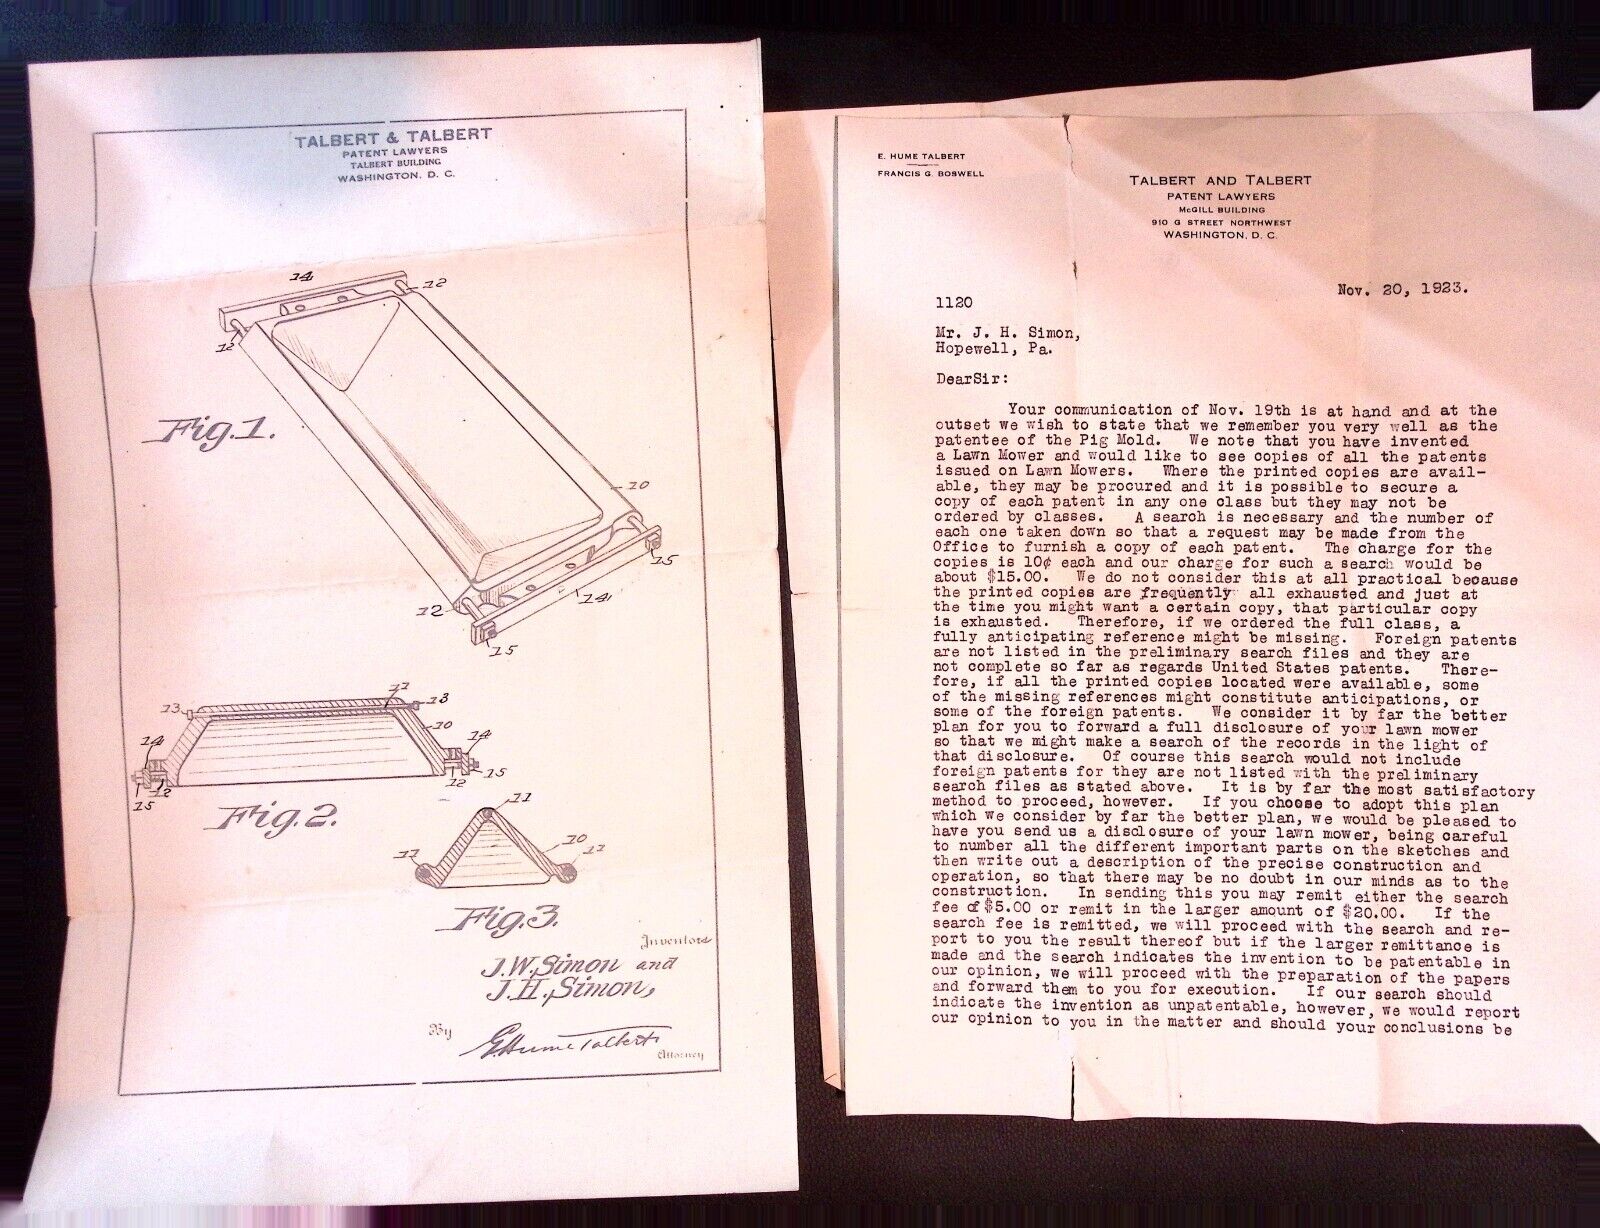 JW Simon JH Simon Pig Mold Patent Application & Letter Talbert Talbert 1923